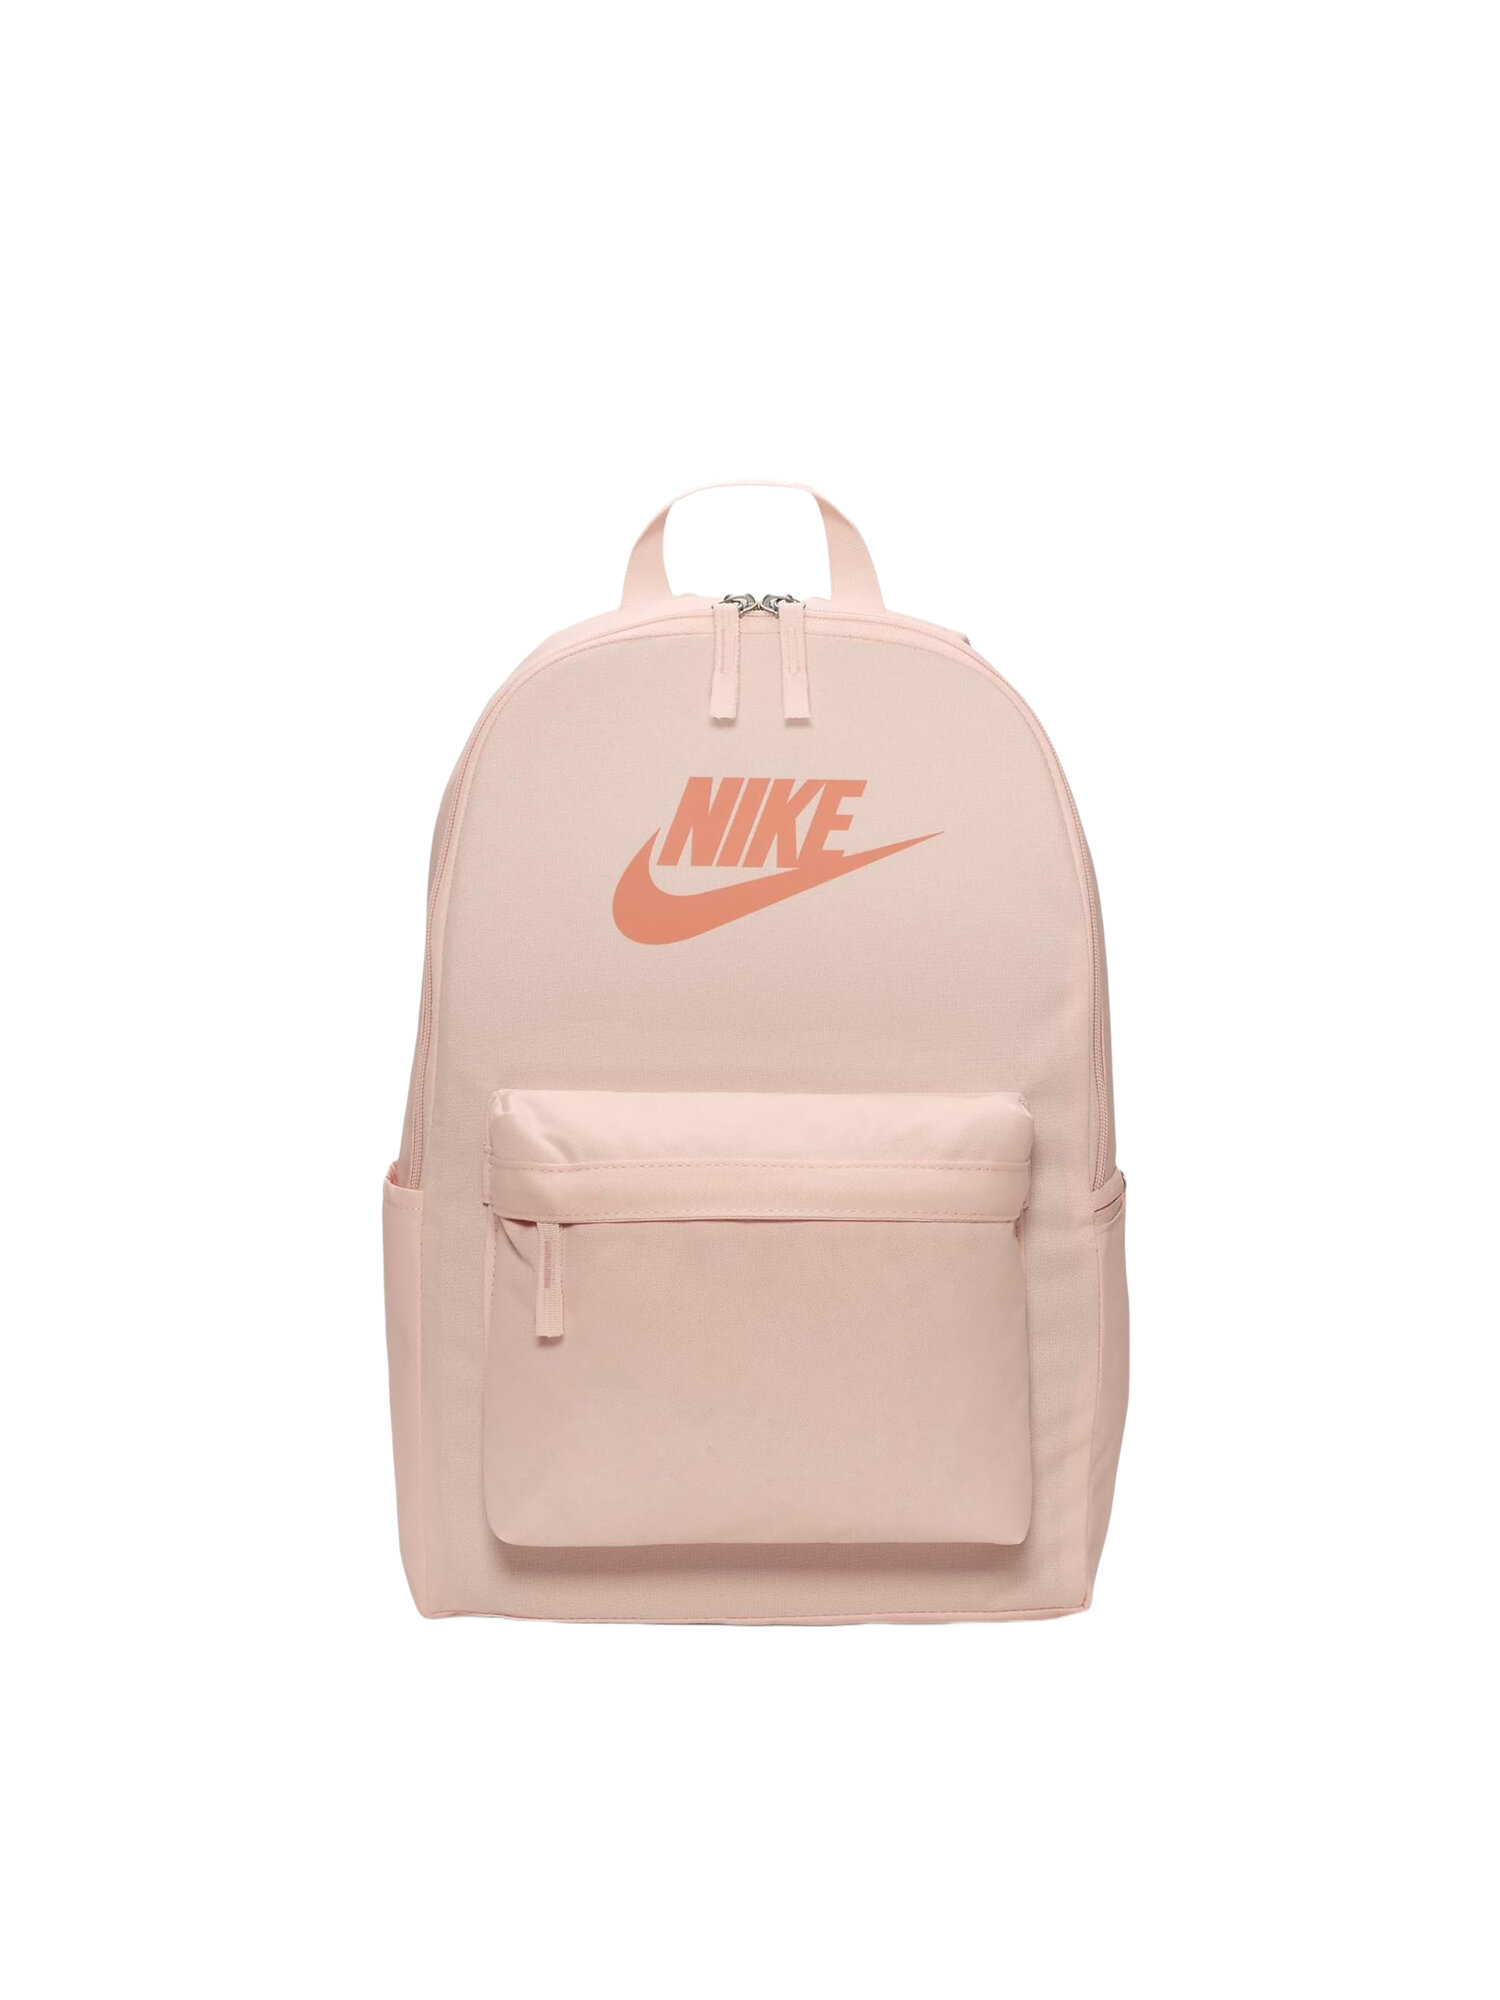 Рюкзак мужской Nike DC4244-328 розовый, 43х30х15 см